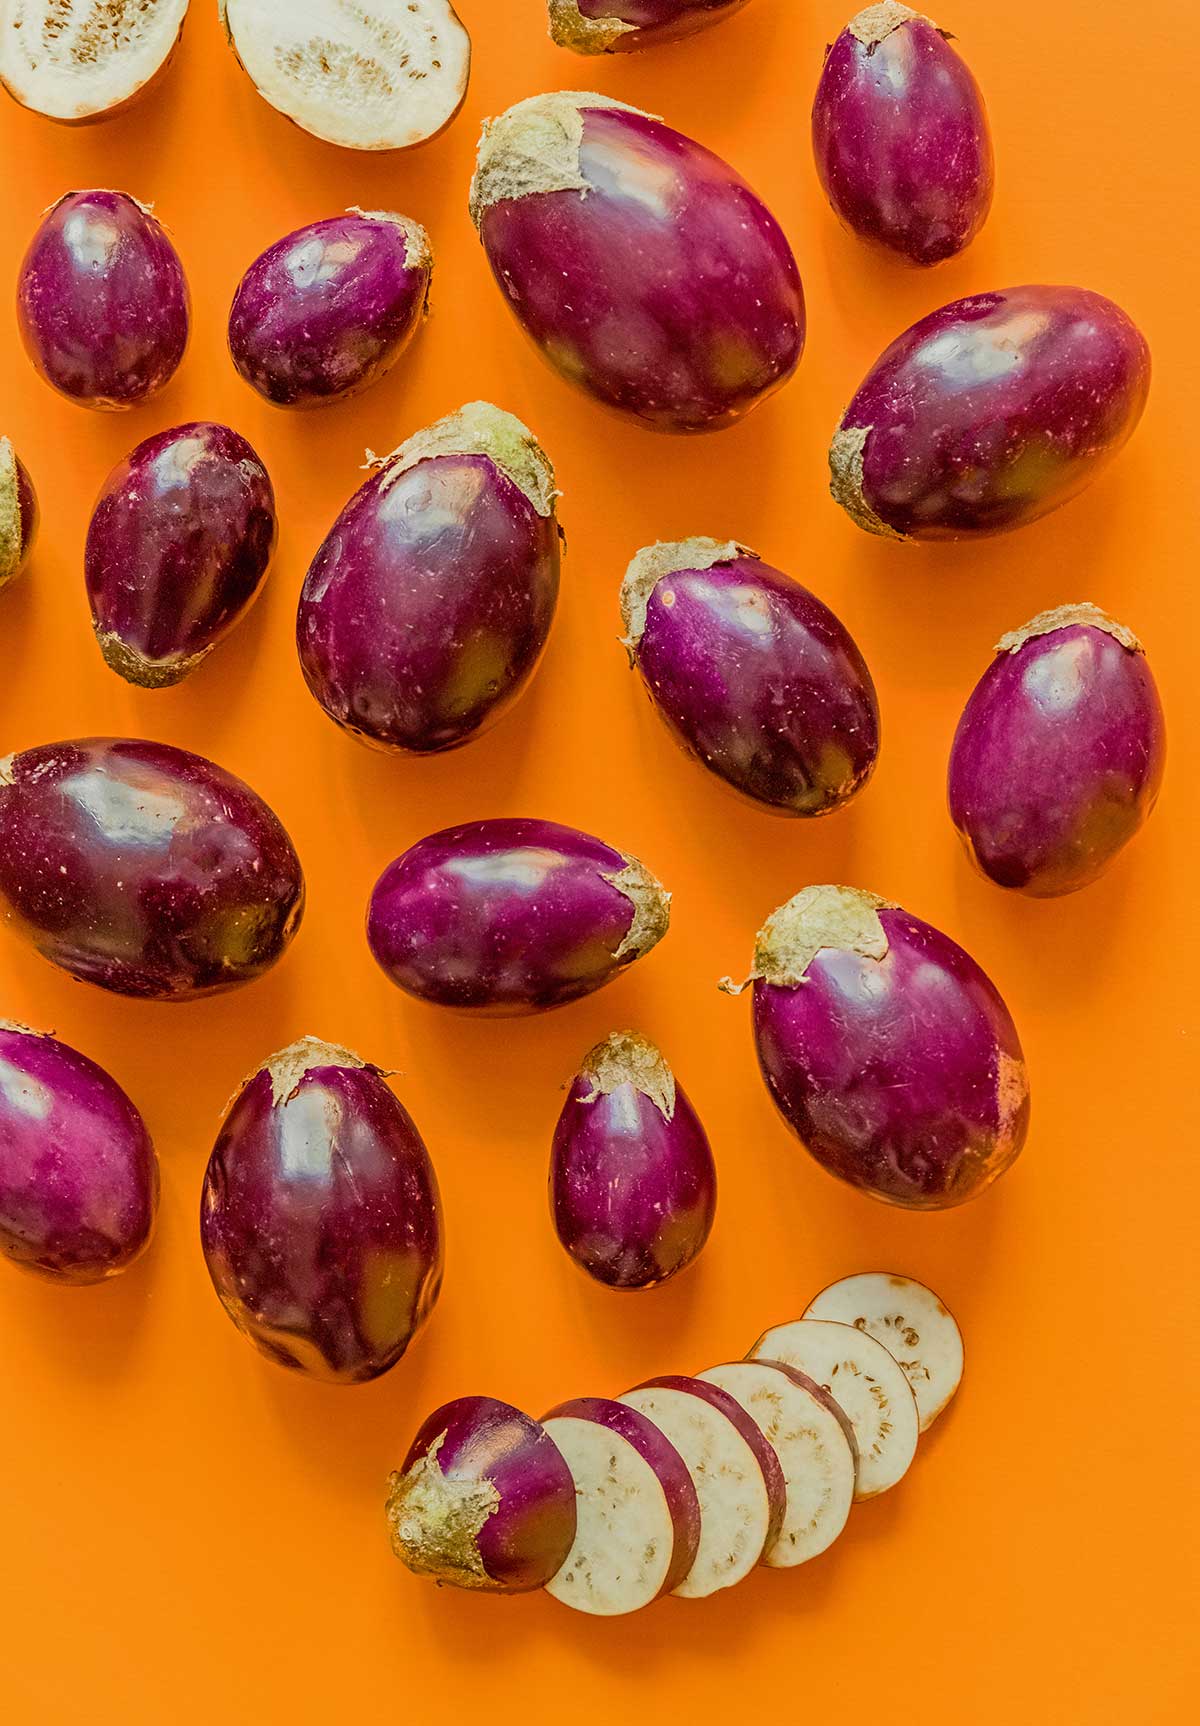 Nineteen Indian eggplants arranged on an orange background